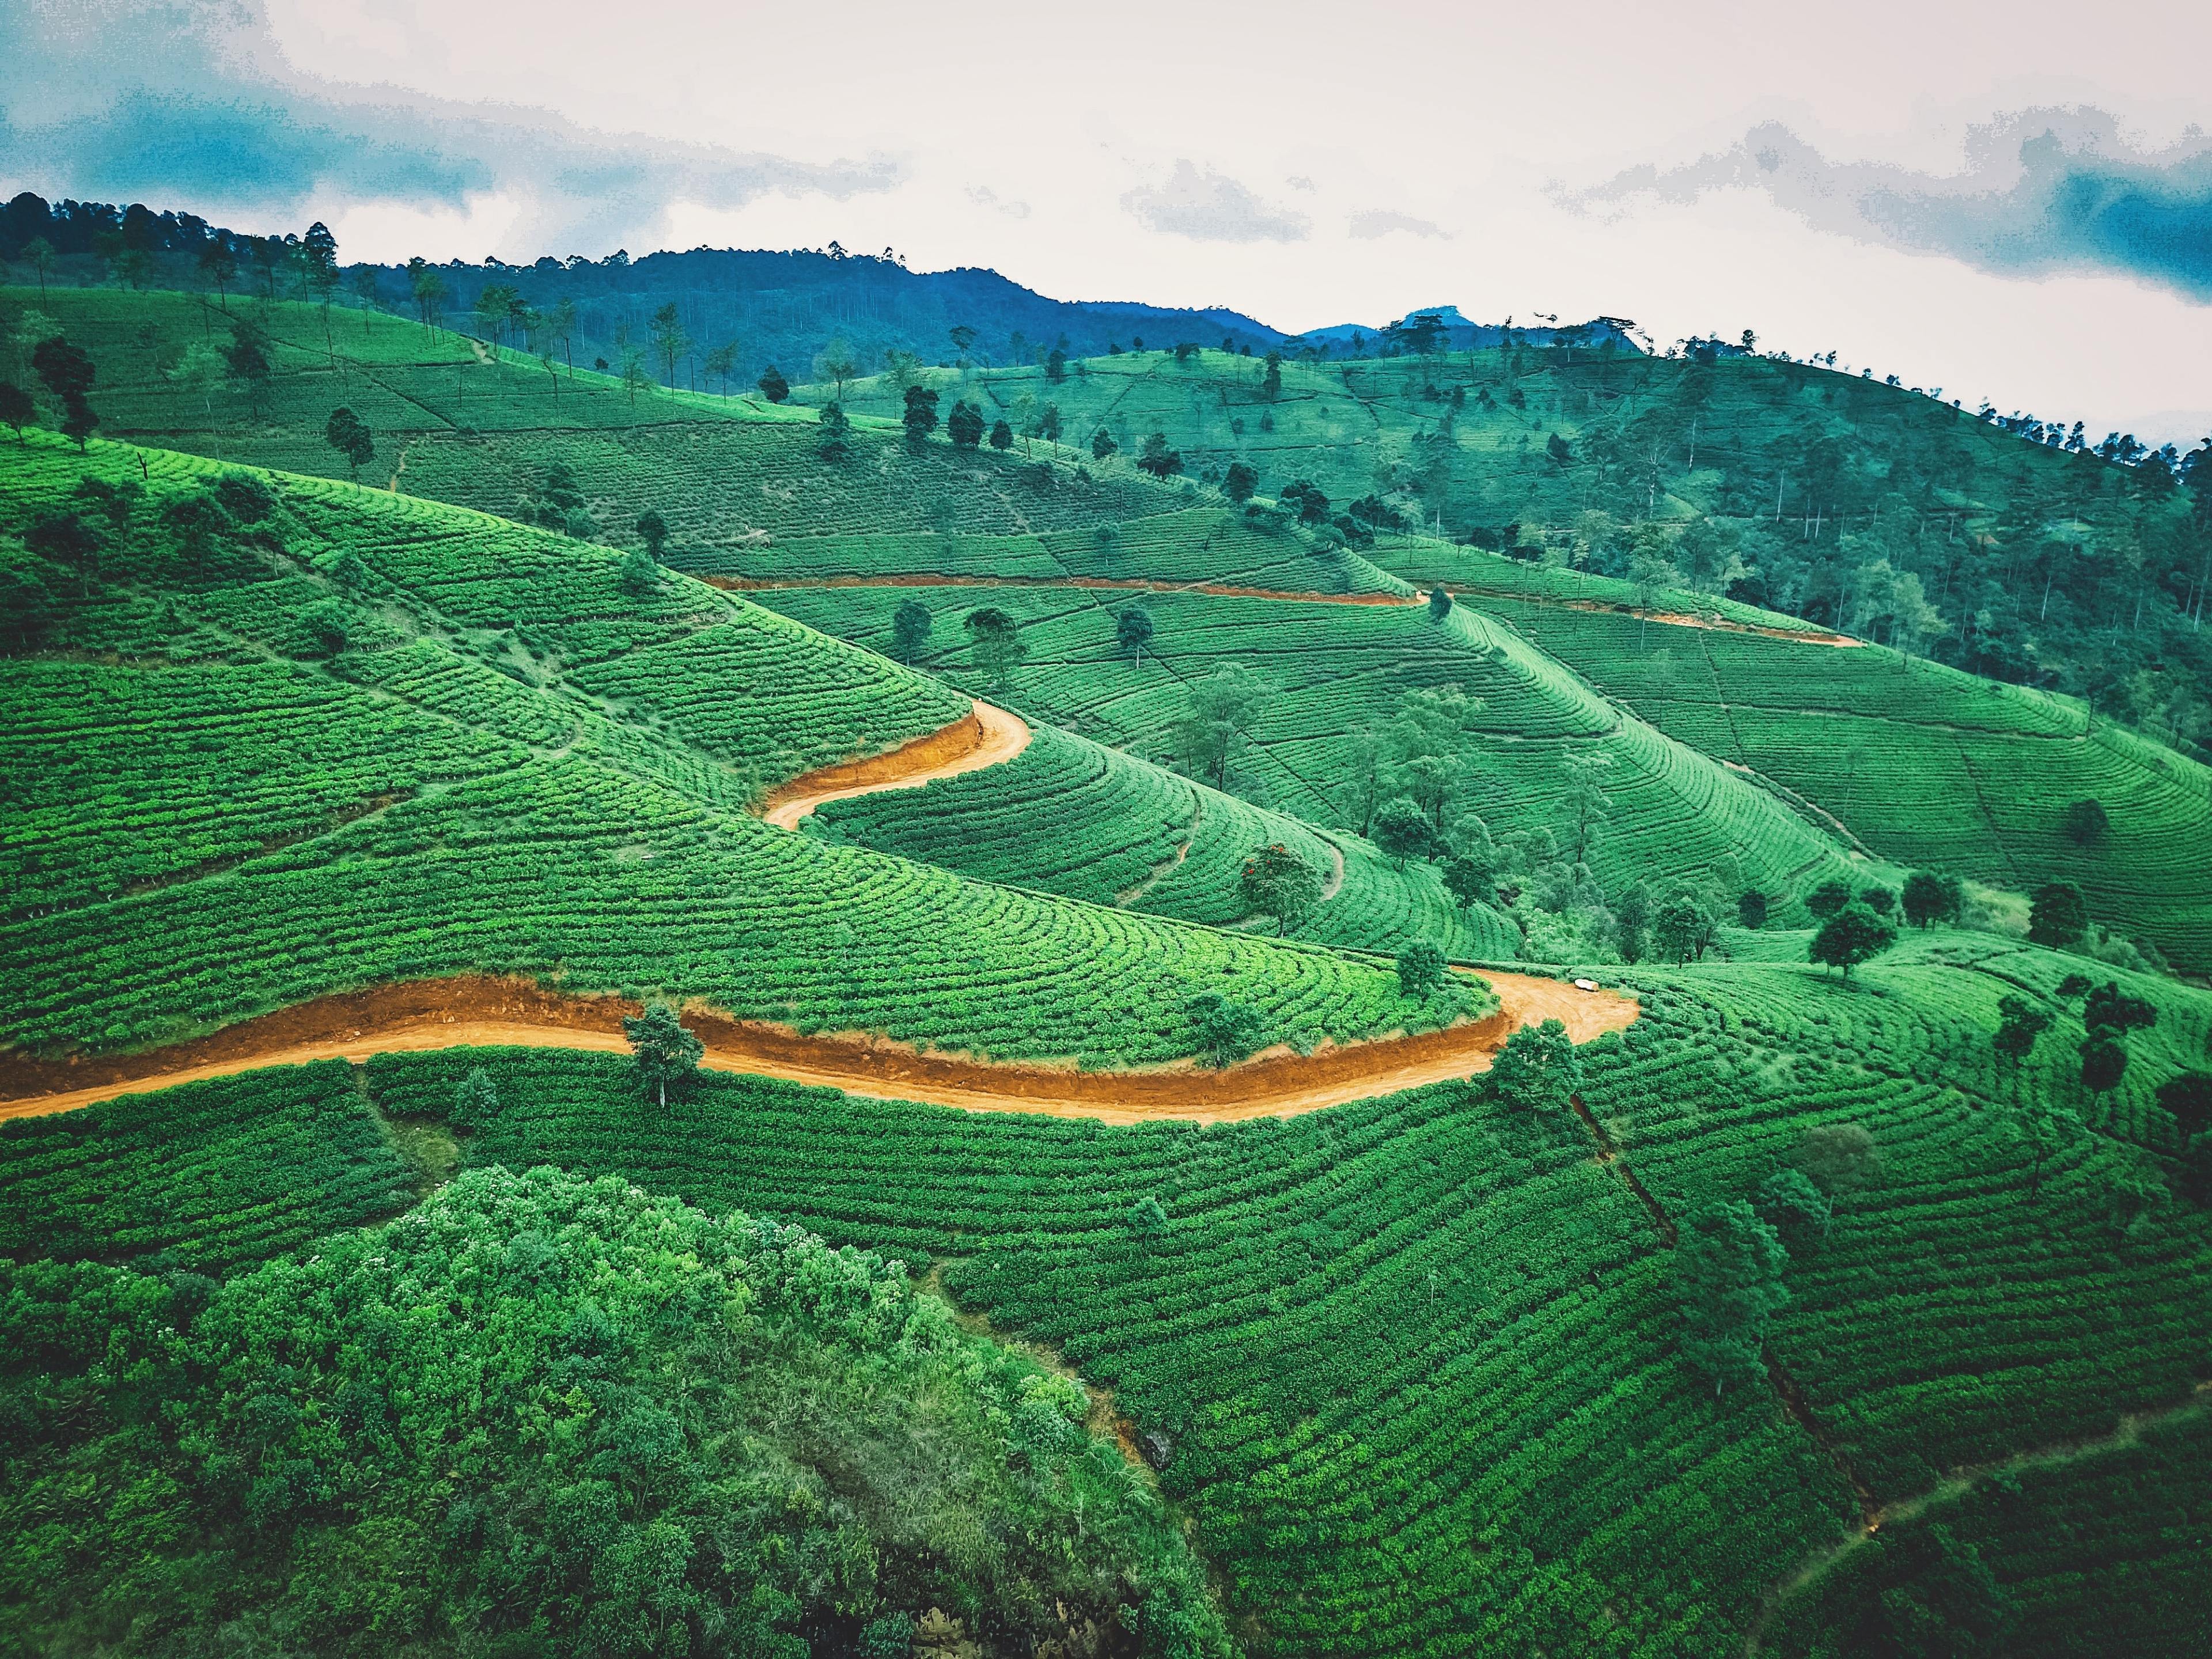 A tea plantation in Sri Lanka.